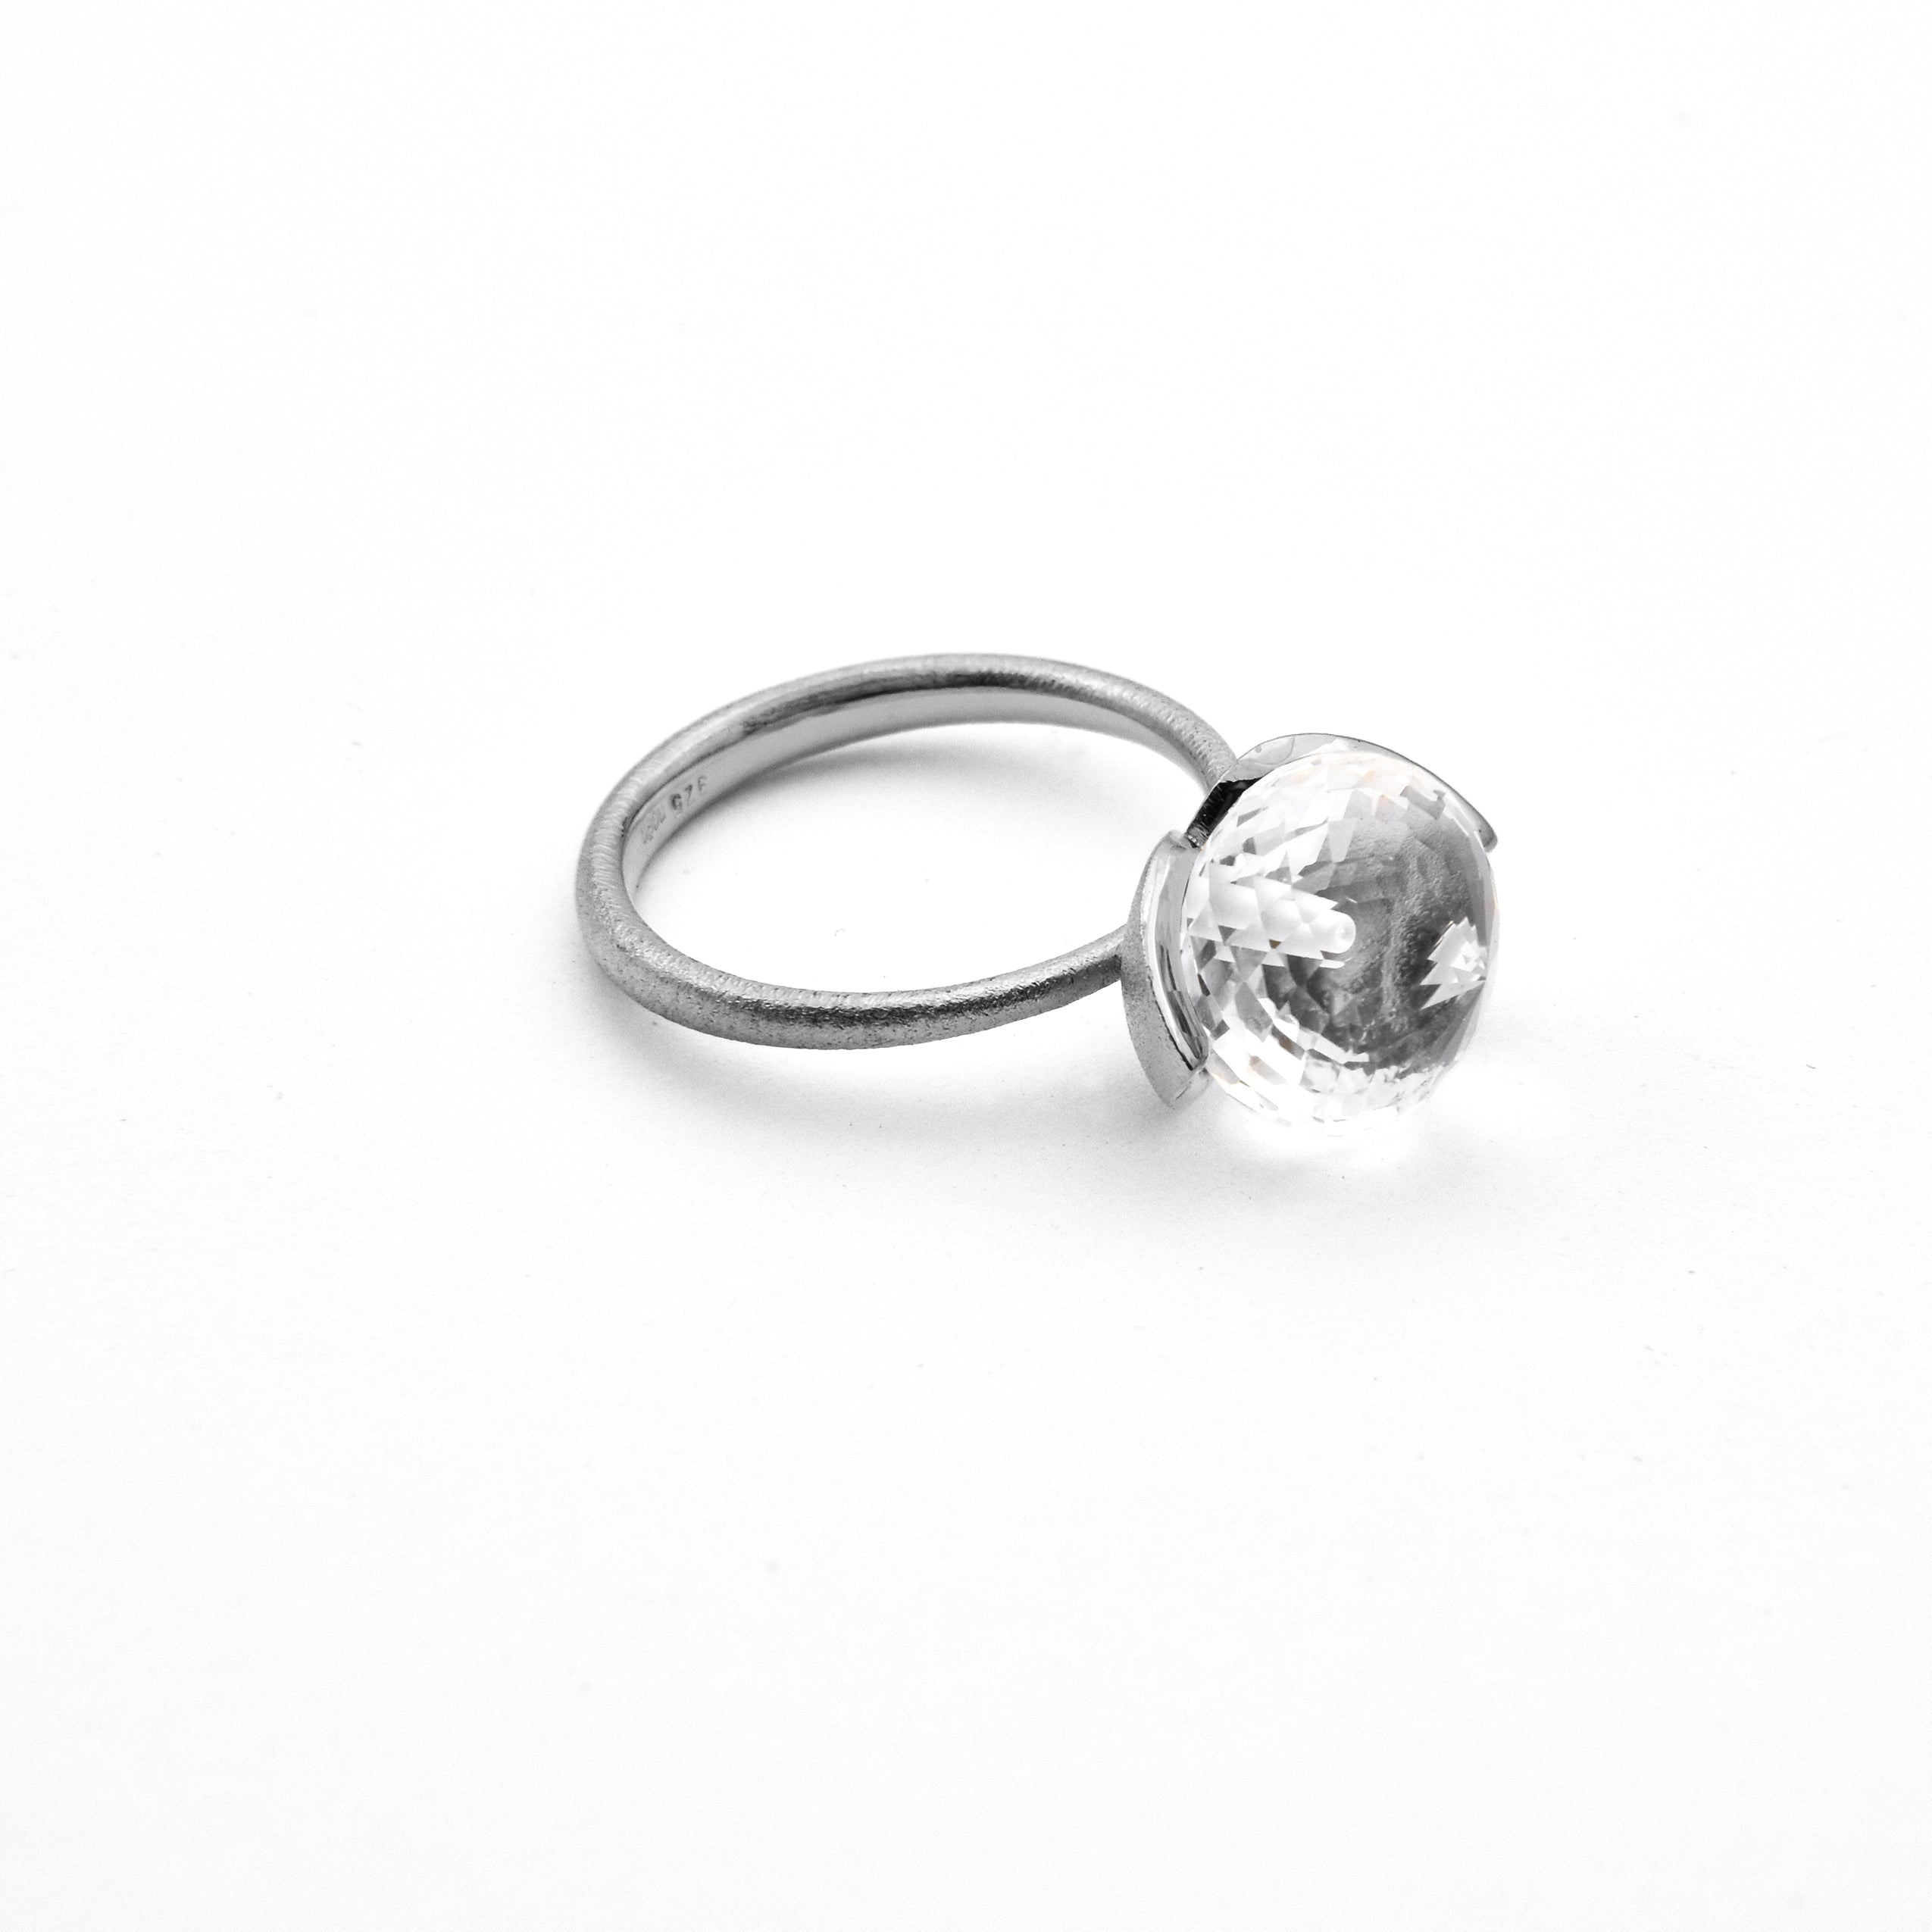 Dolce ring "medium" met bergkristal 925/-